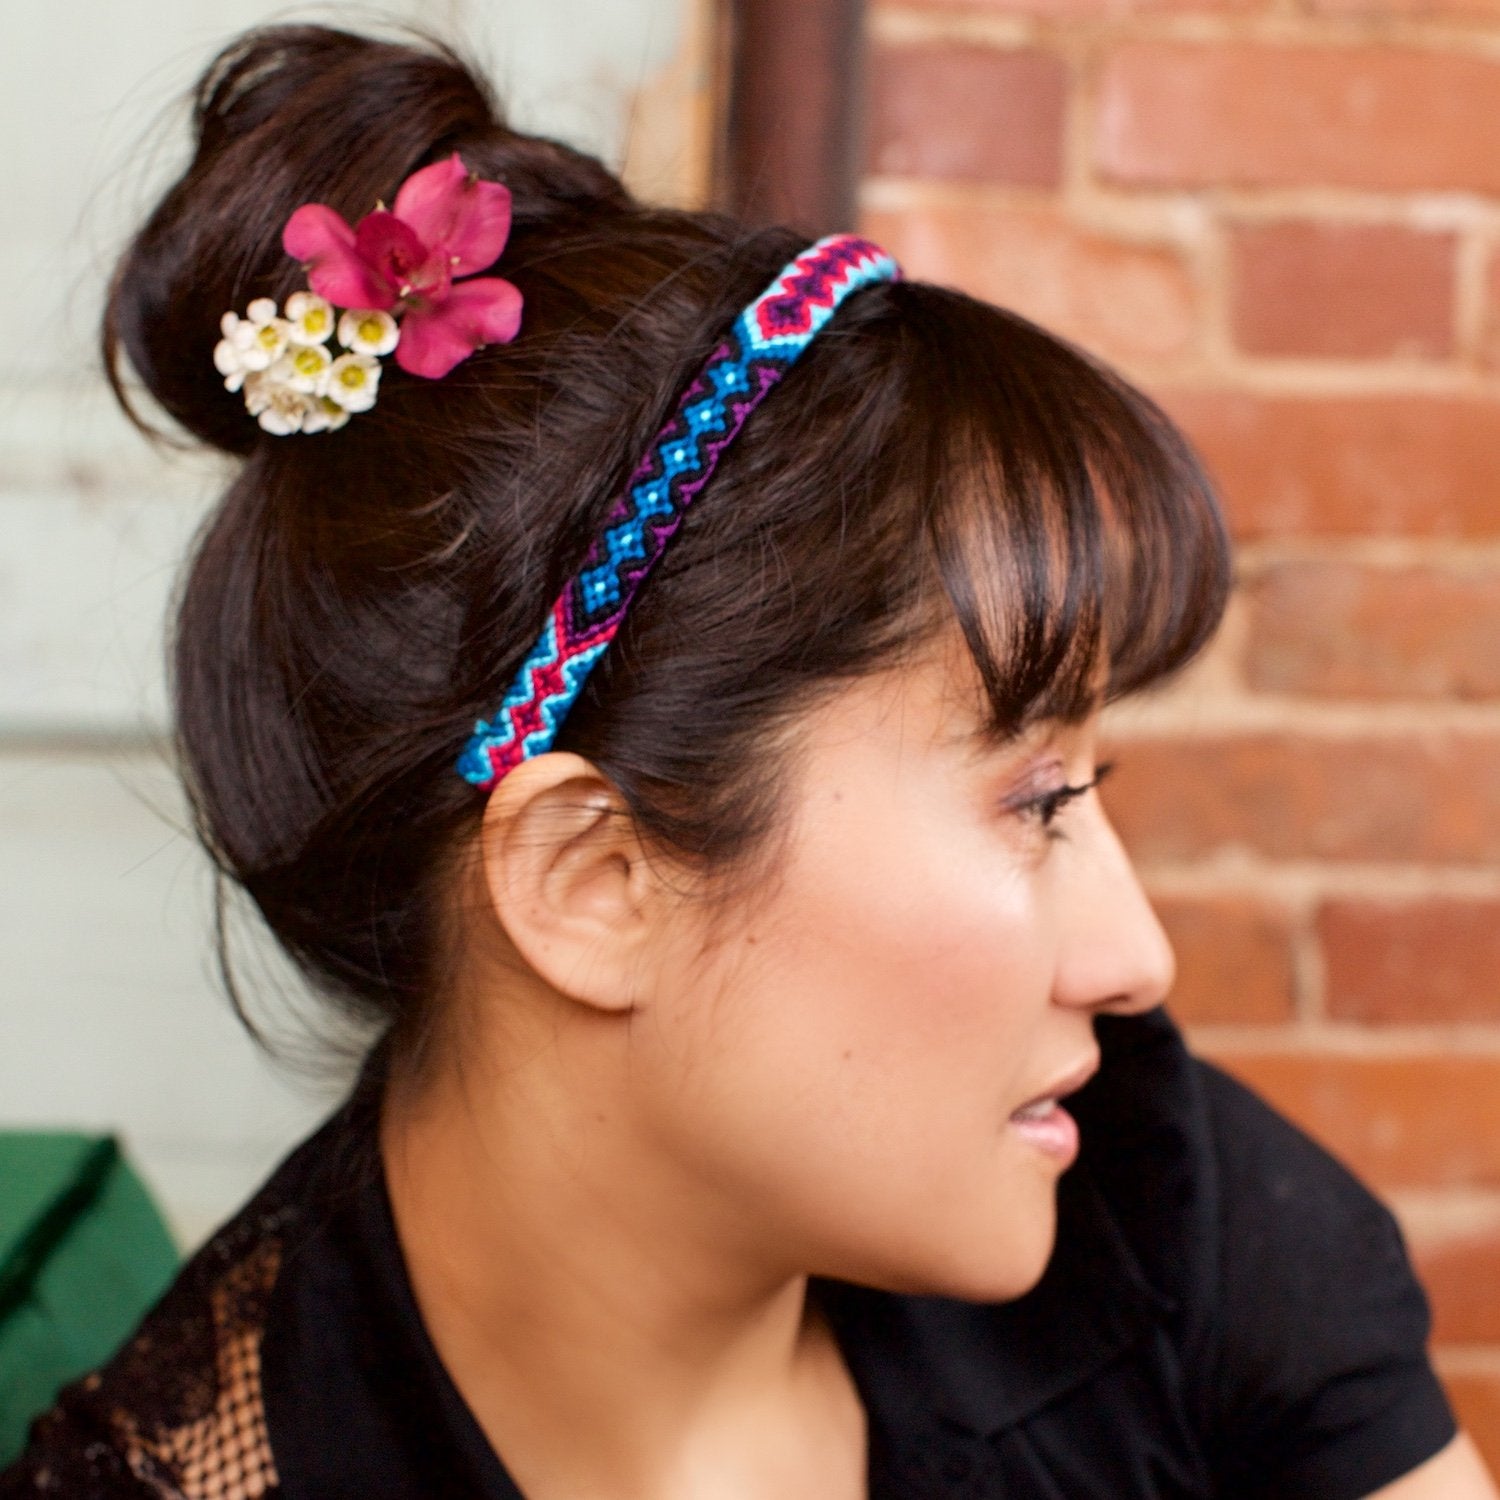 Lucia's World Emporium Fair Trade Handmade Woven Friendship Headband from Guatemala